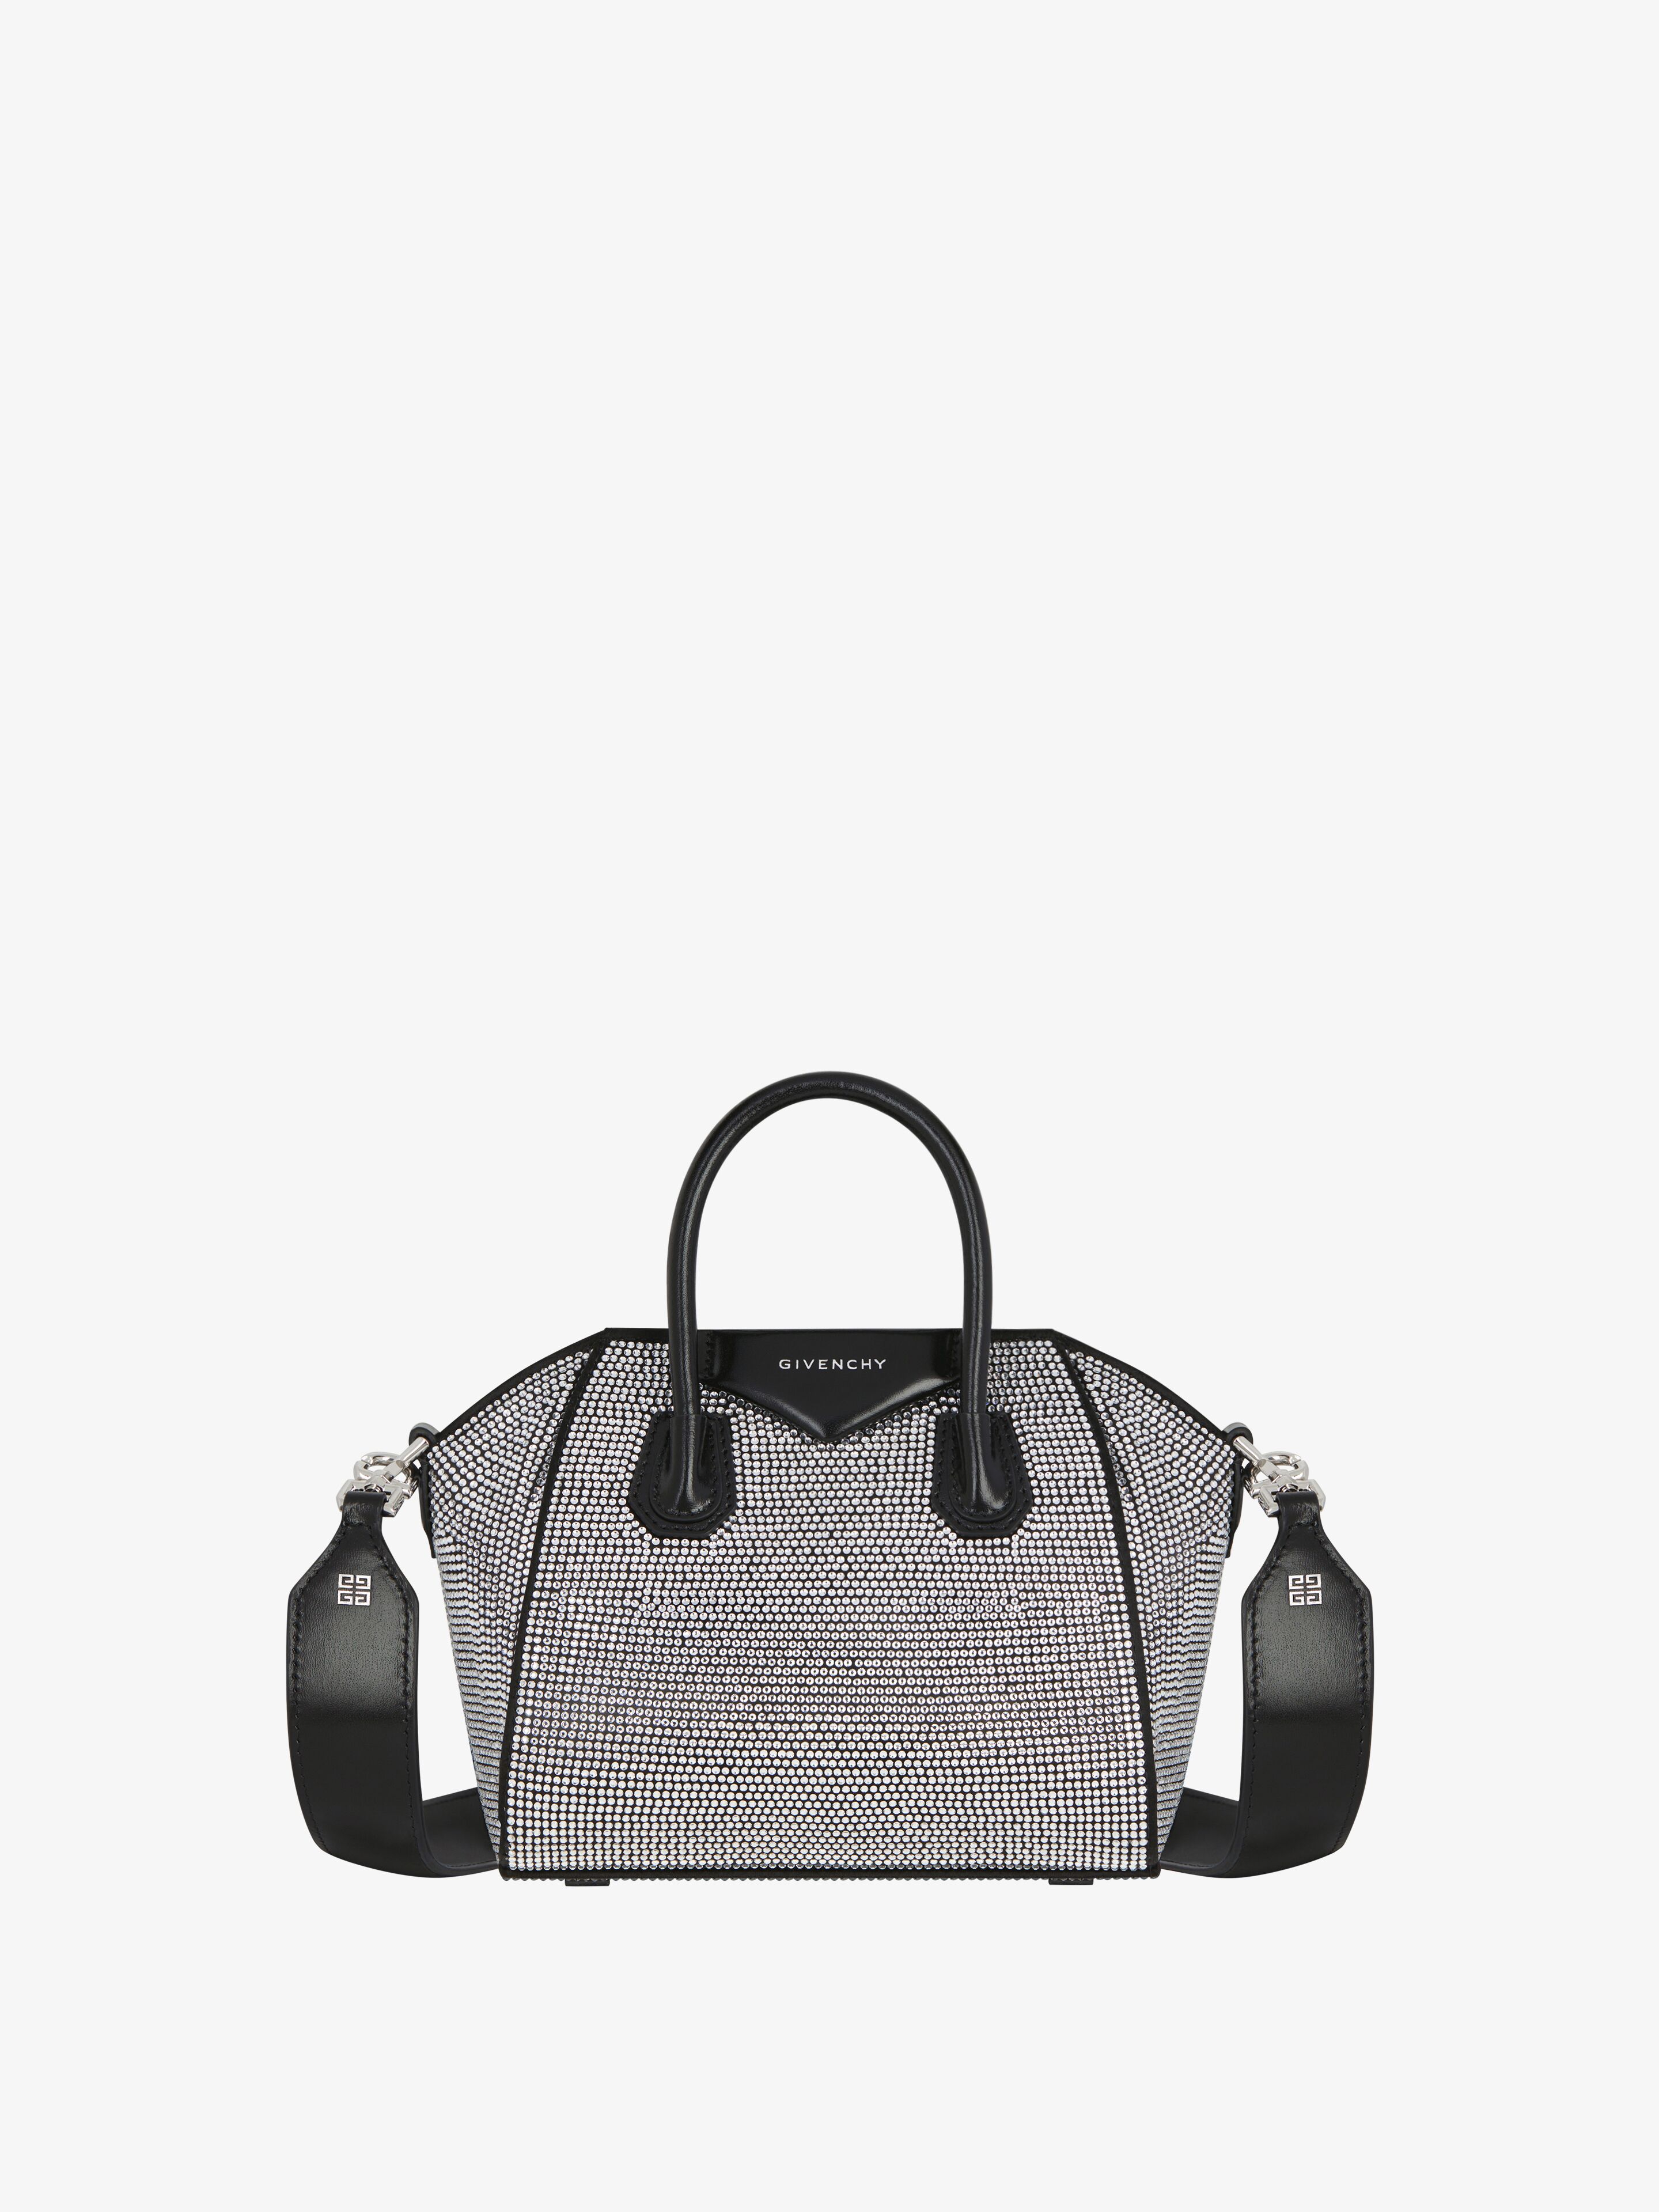 Givenchy Antigona Toy Bag In Satin With Strass In Metallic